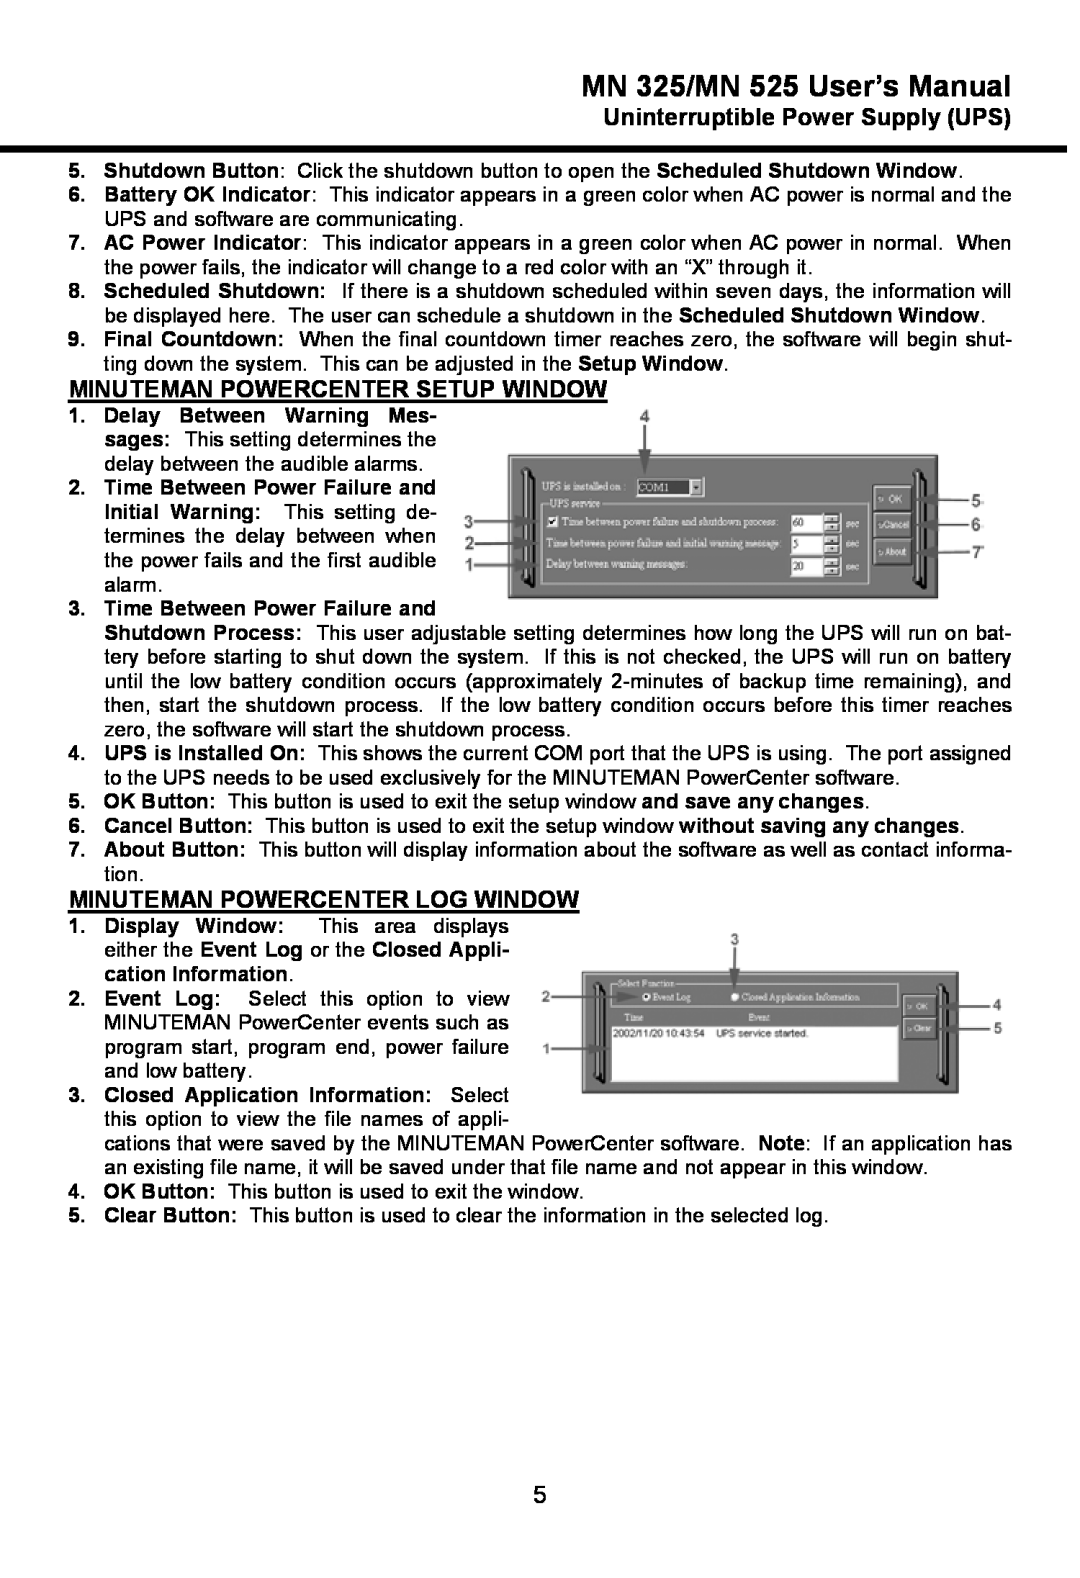 Minuteman UPS MN 325/MN 525 User’s Manual, Uninterruptible Power Supply UPS, Minuteman Powercenter Setup Window 